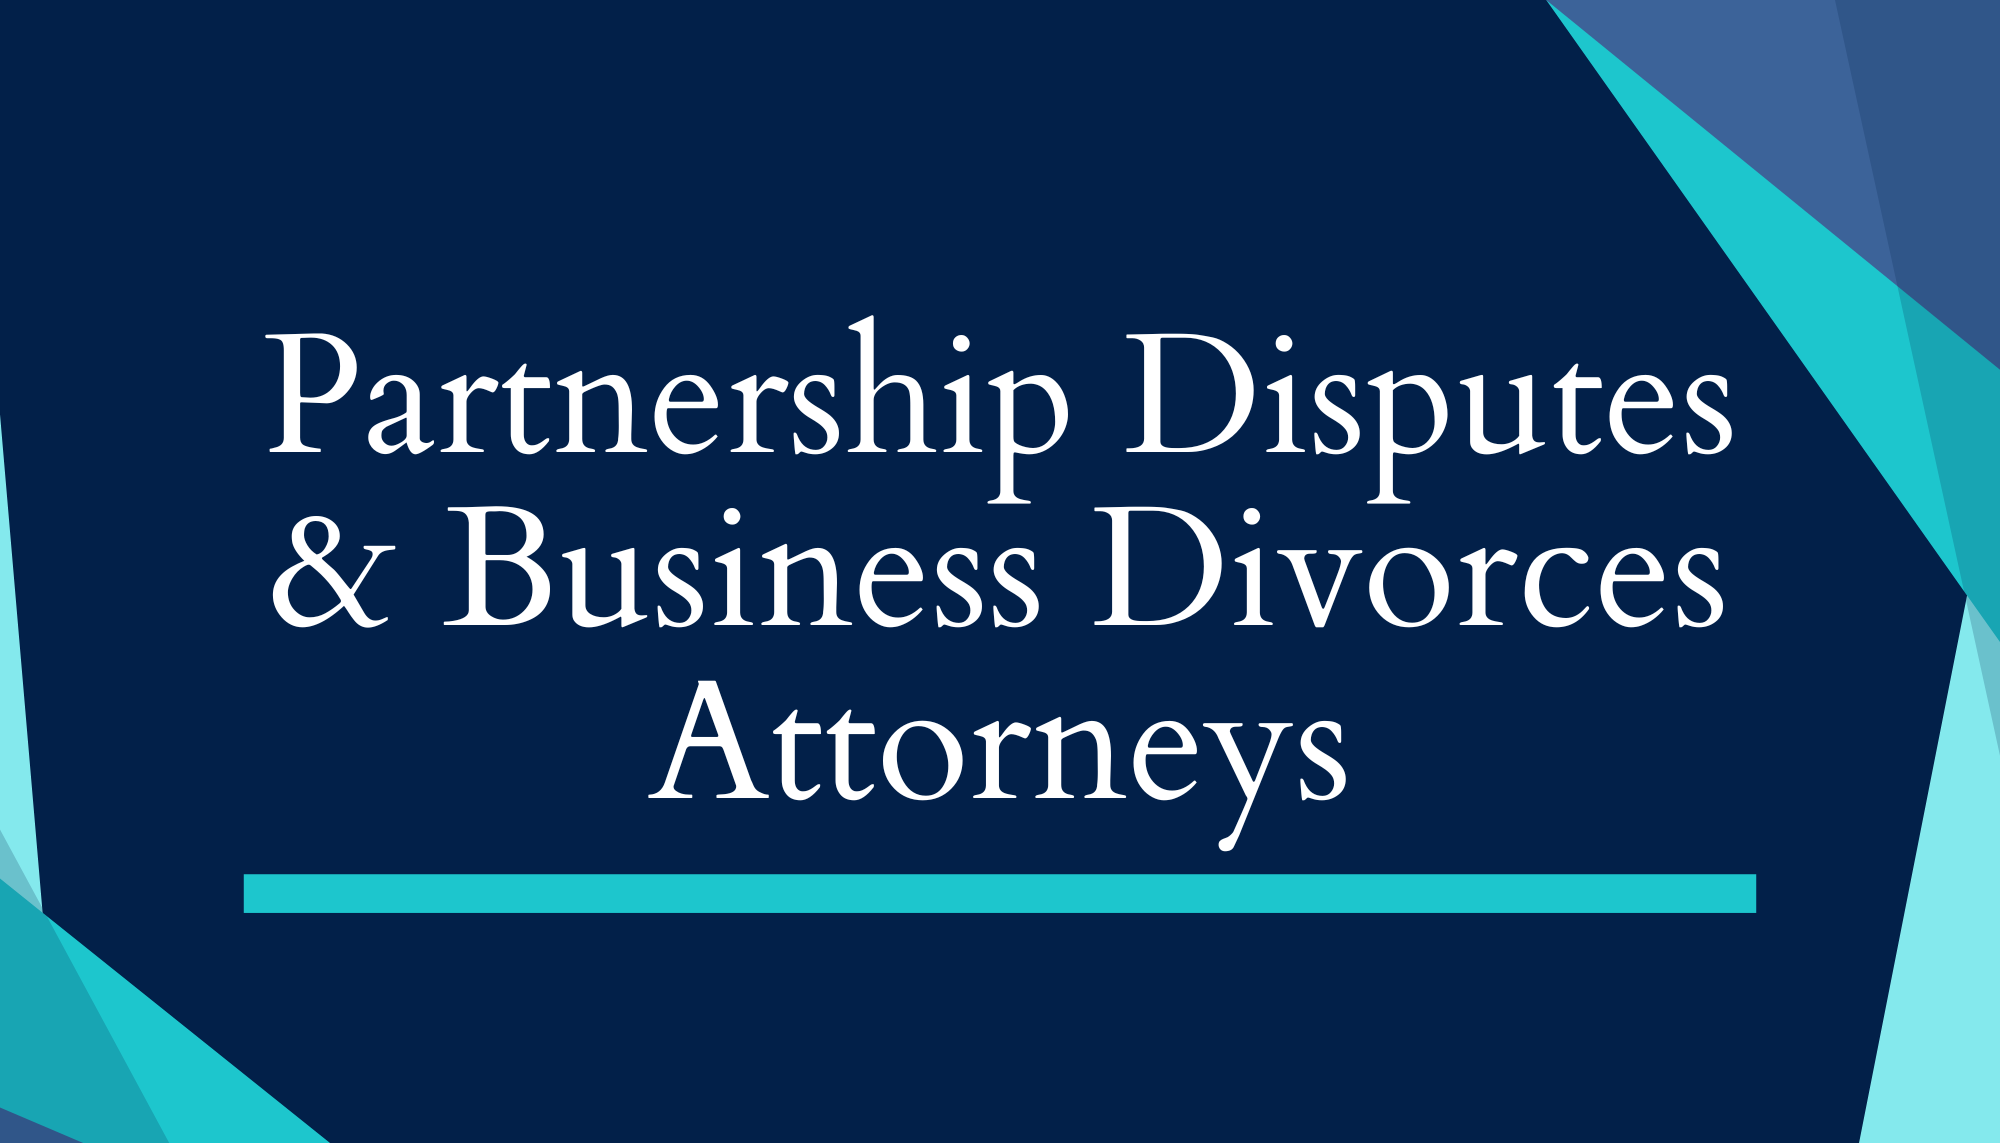 General Partnership Disputes & Business Divorces Attorneys